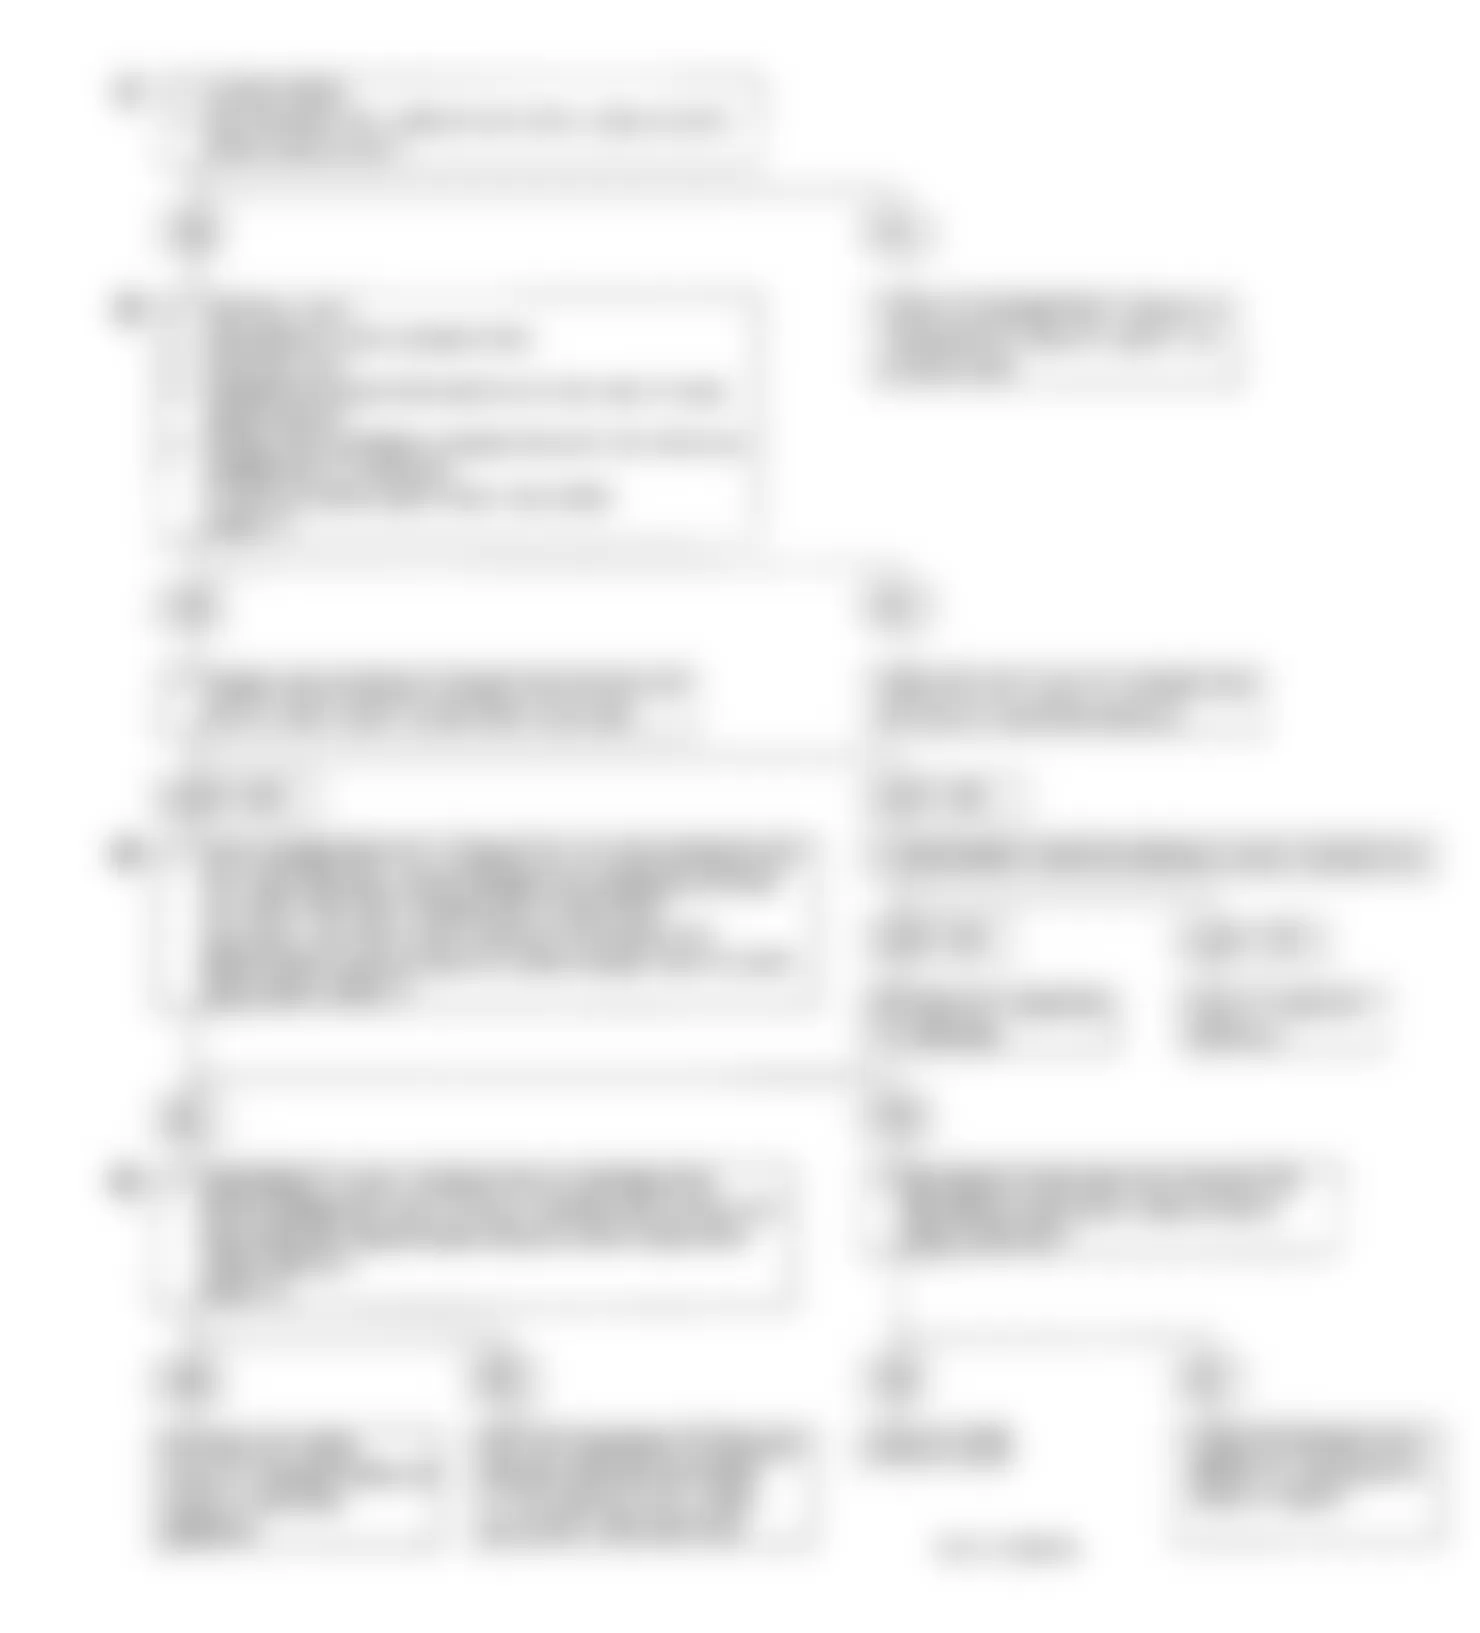 Isuzu Stylus S 1992 - Component Locations -  Code No. 42 Flow Chart (1.6L & 1.8L Non-Turbo) EST (Electronic Spark Timing)